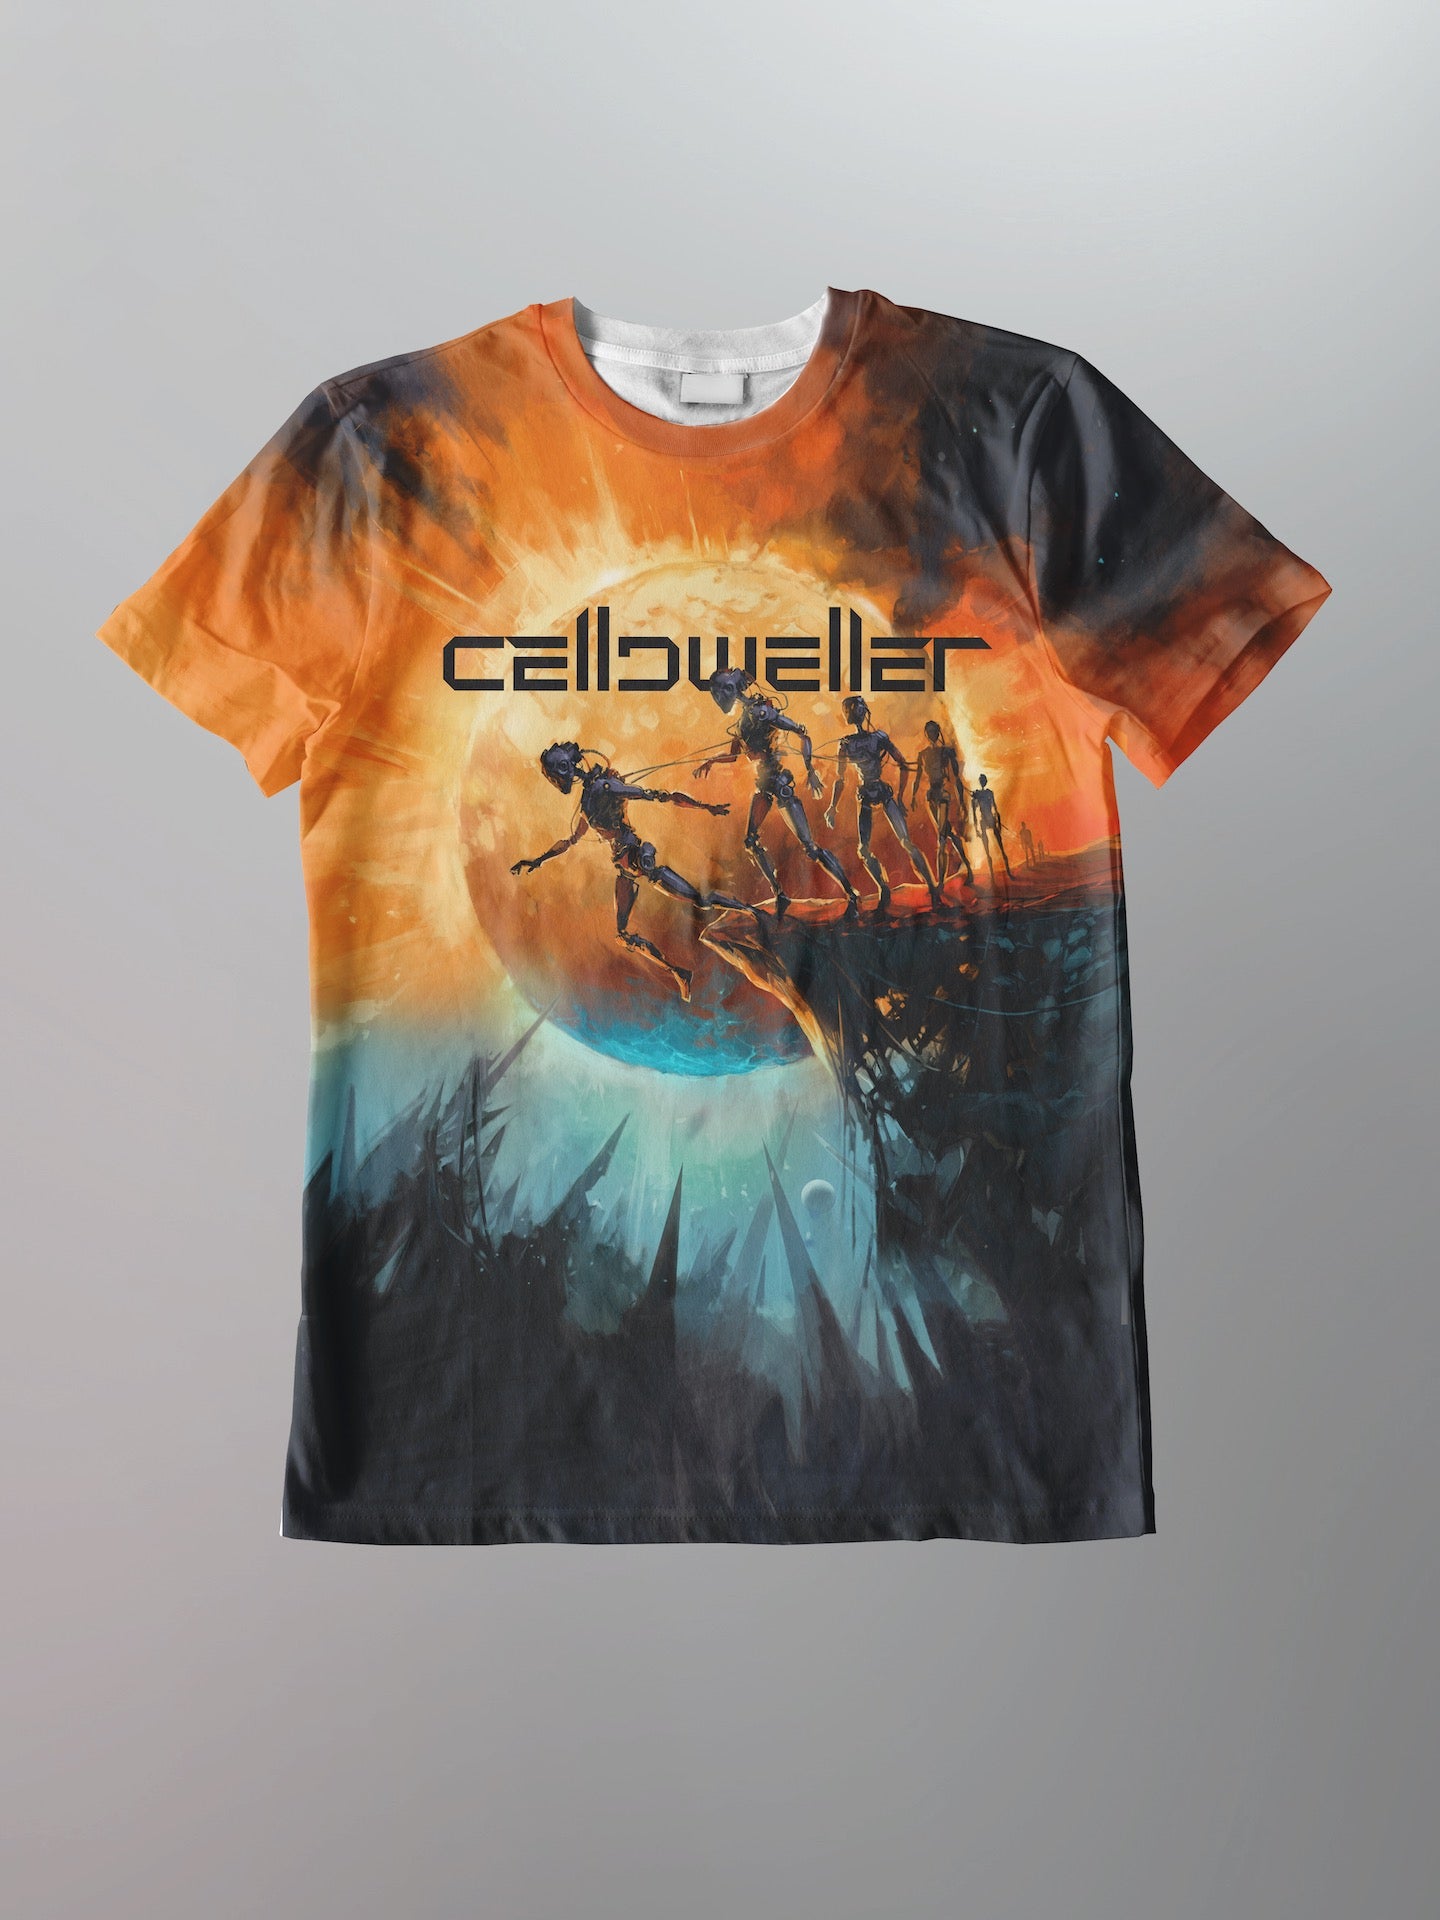 Celldweller - Blind Lead The Blind Shirt